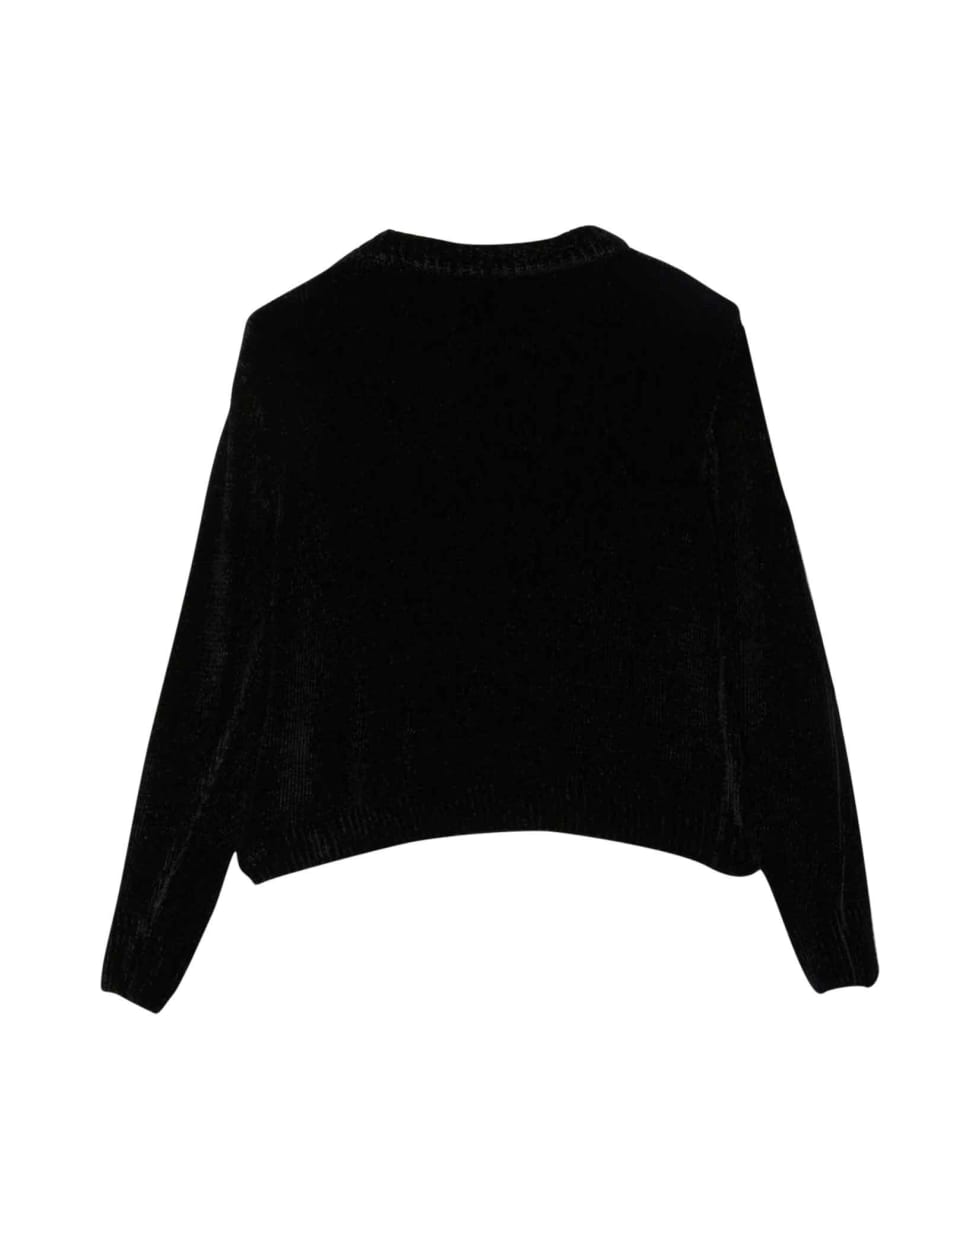 Balmain Unisex Black Sweater - Nero/bianco